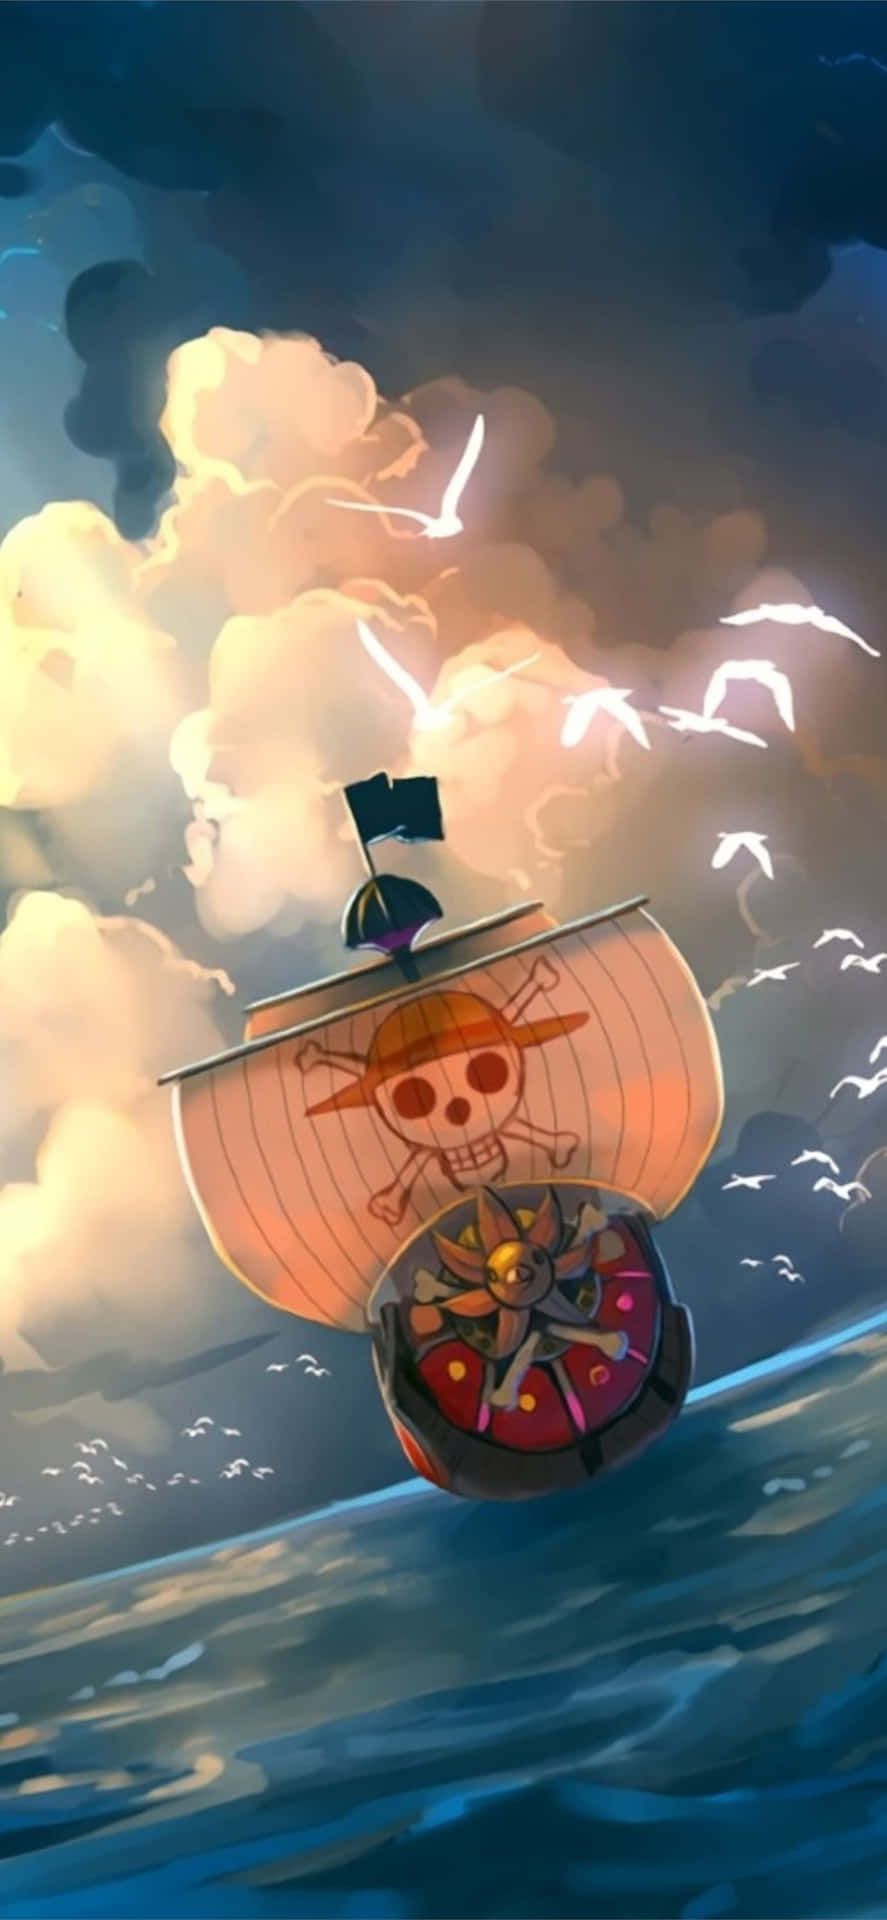 Genialanime Para Iphone Del Barco De One Piece. Fondo de pantalla